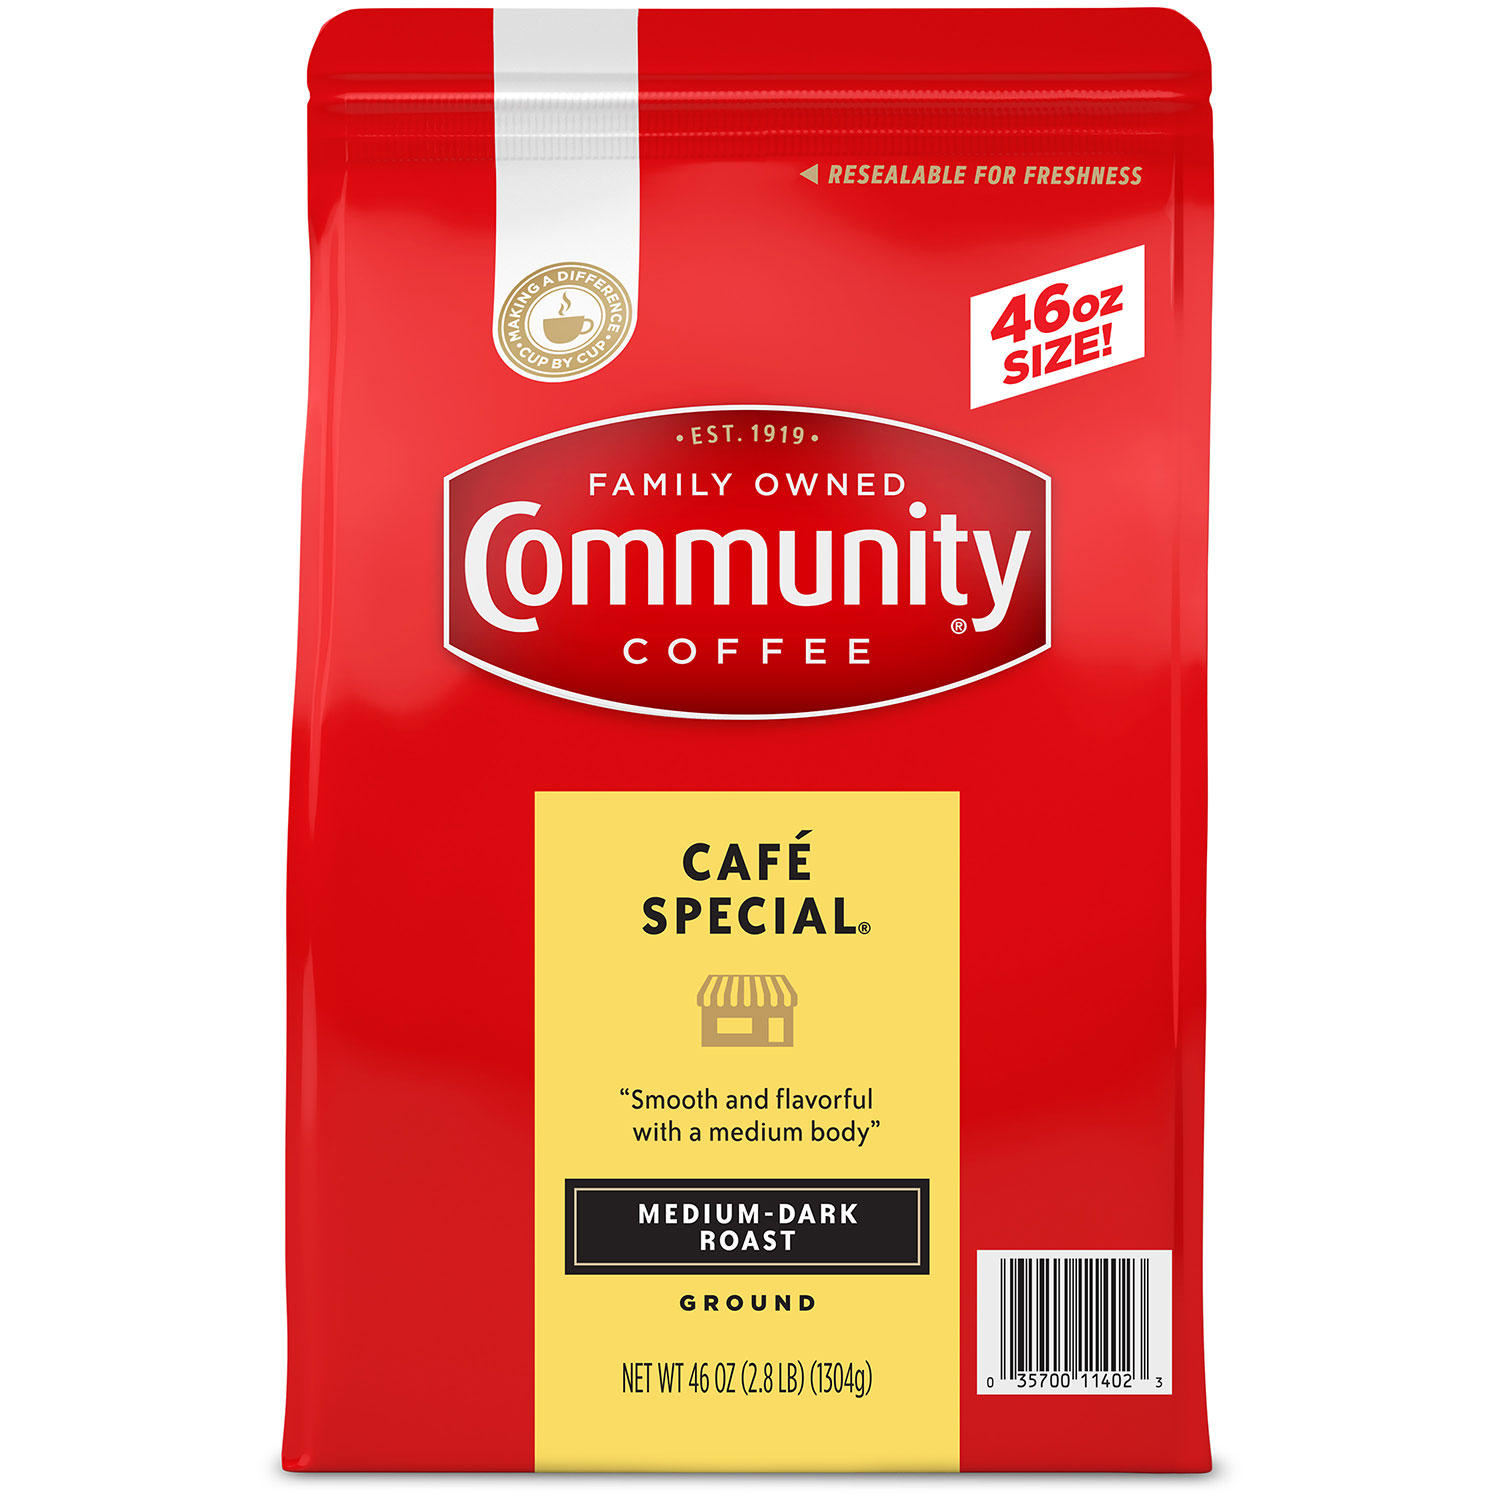 Community Coffee Ground Cafe Special 46oz